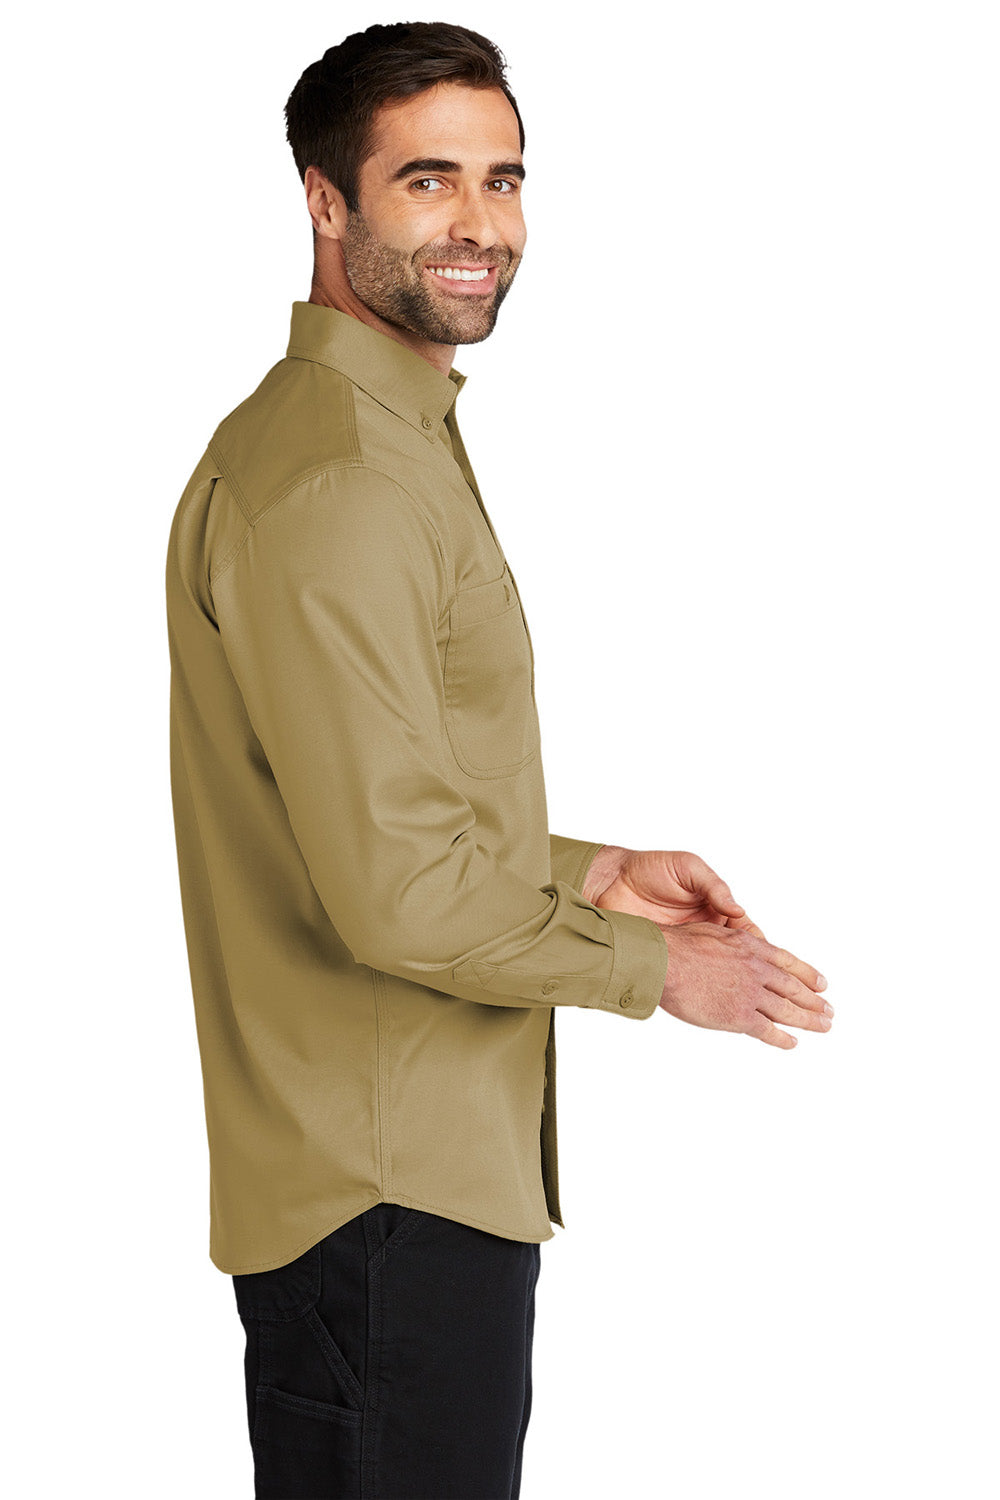 Carhartt CT102538 Mens Rugged Professional Series Wrinkle Resistant Long Sleeve Button Down Shirt w/ Pocket Dark Khaki Brown Model Side